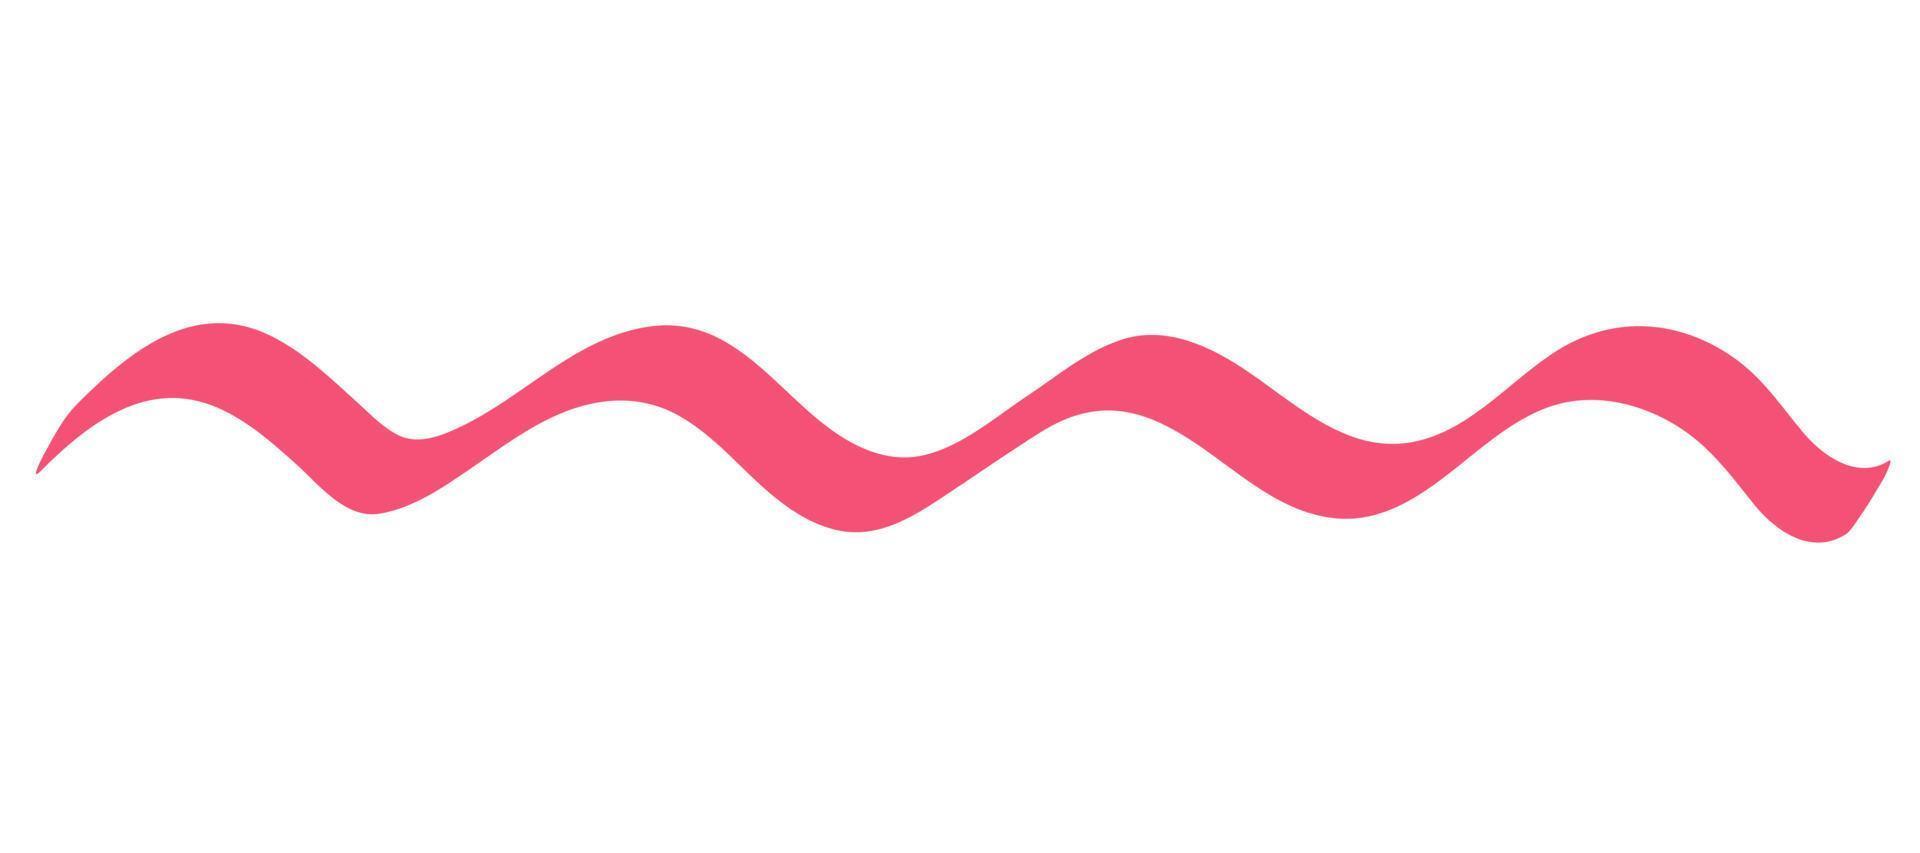 marca de marcador rosa dibujado a mano de línea ondulada. vector